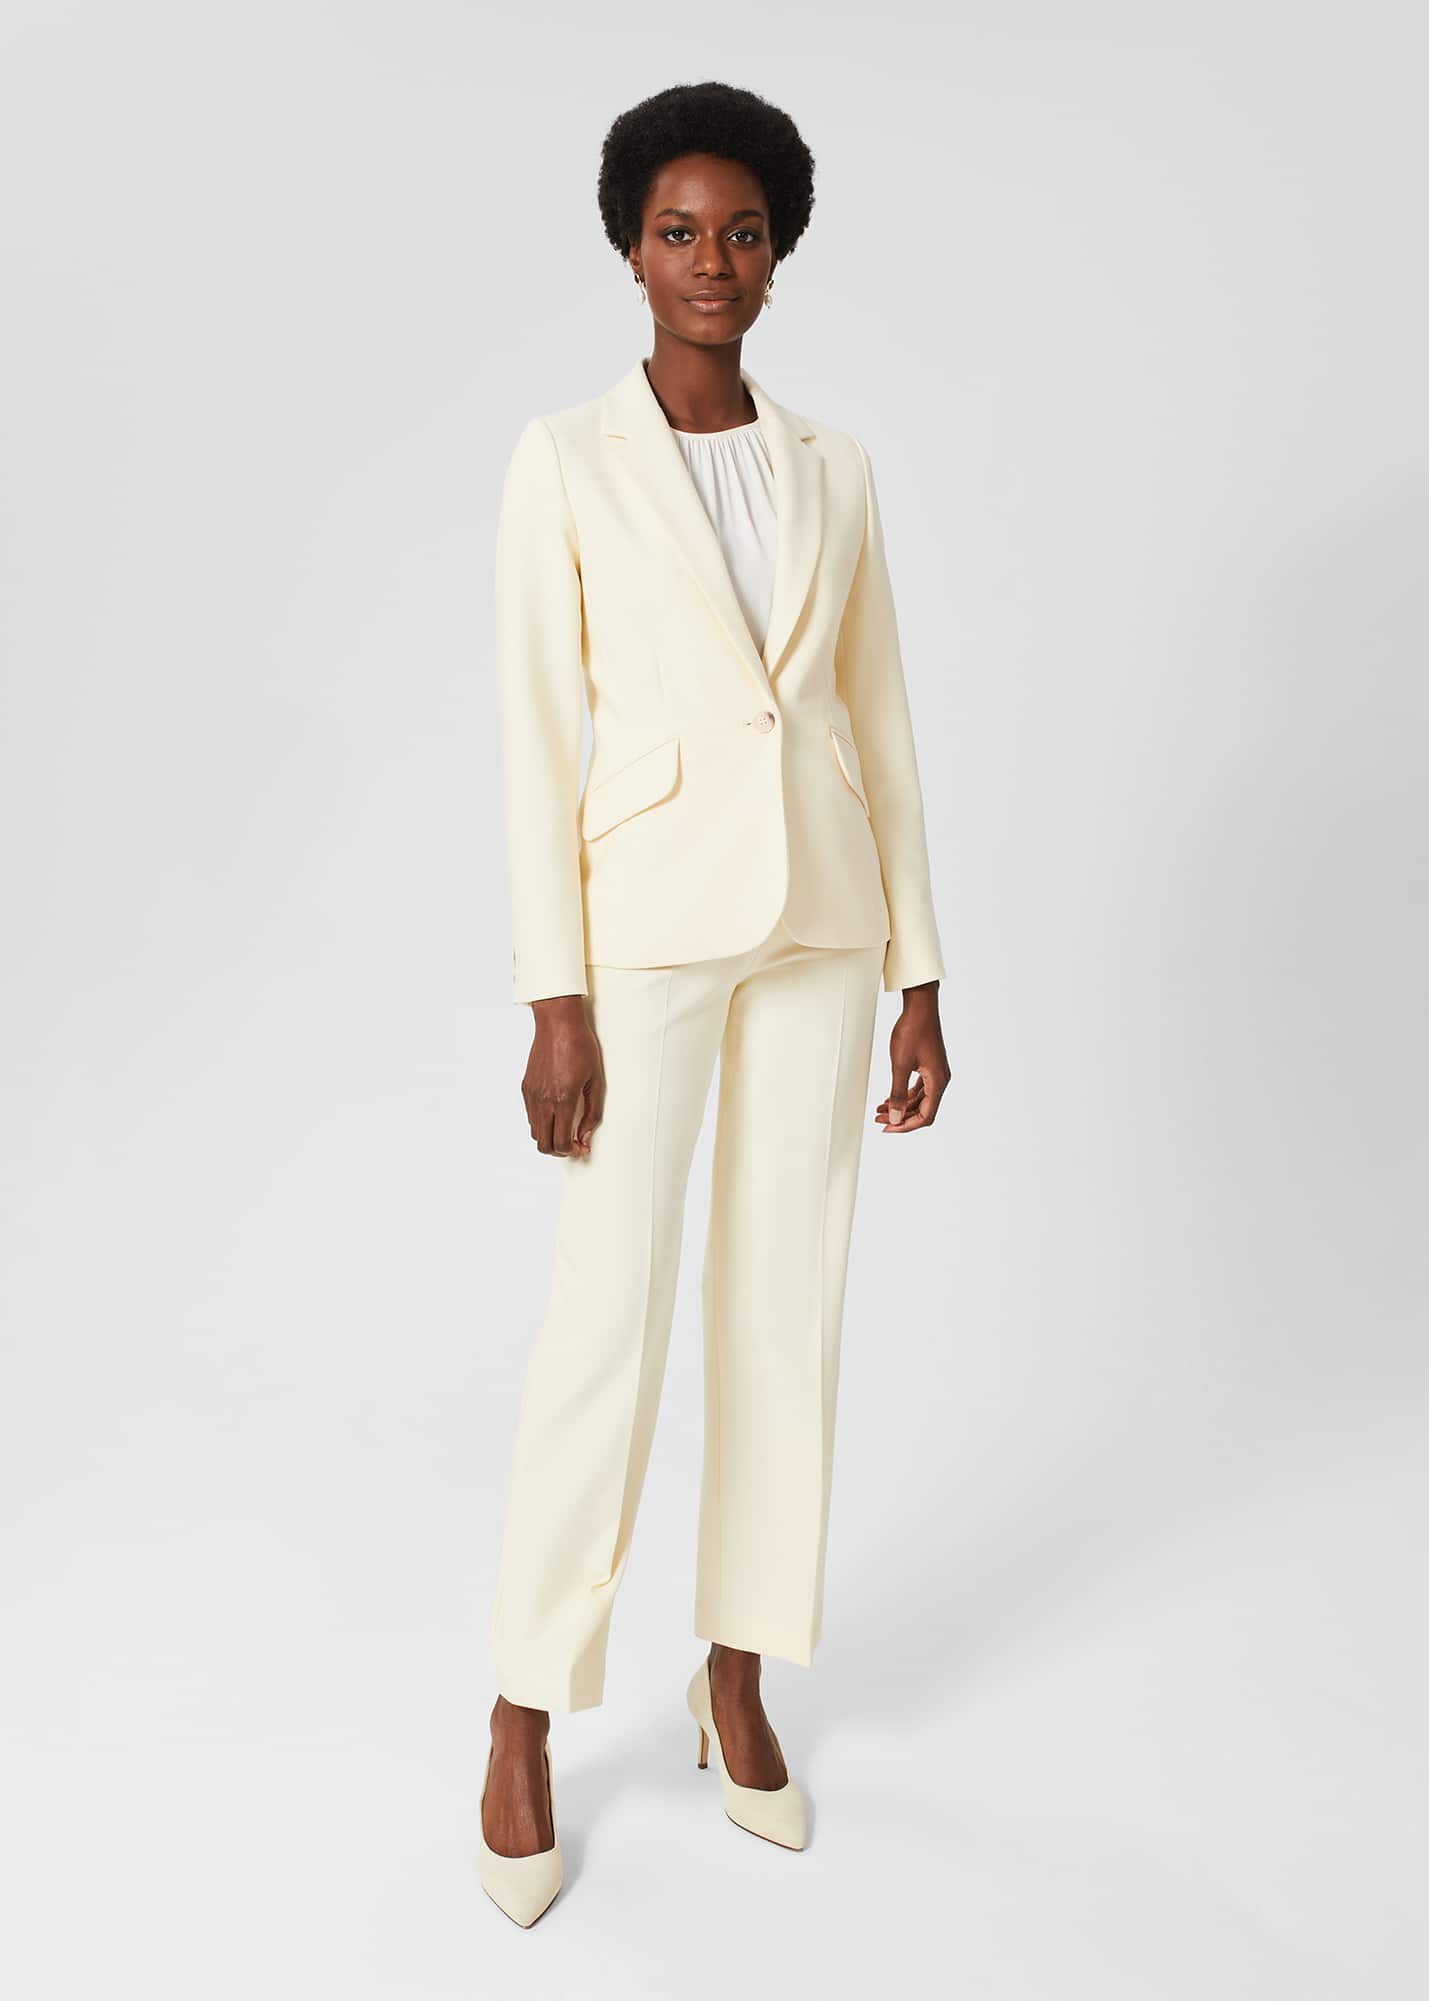 Amazon.com: MODFUL Women's 2 Piece Business Suit Set One Button Solid Color  Blazer Trouser Suit(Apricot,X-Small) : Clothing, Shoes & Jewelry